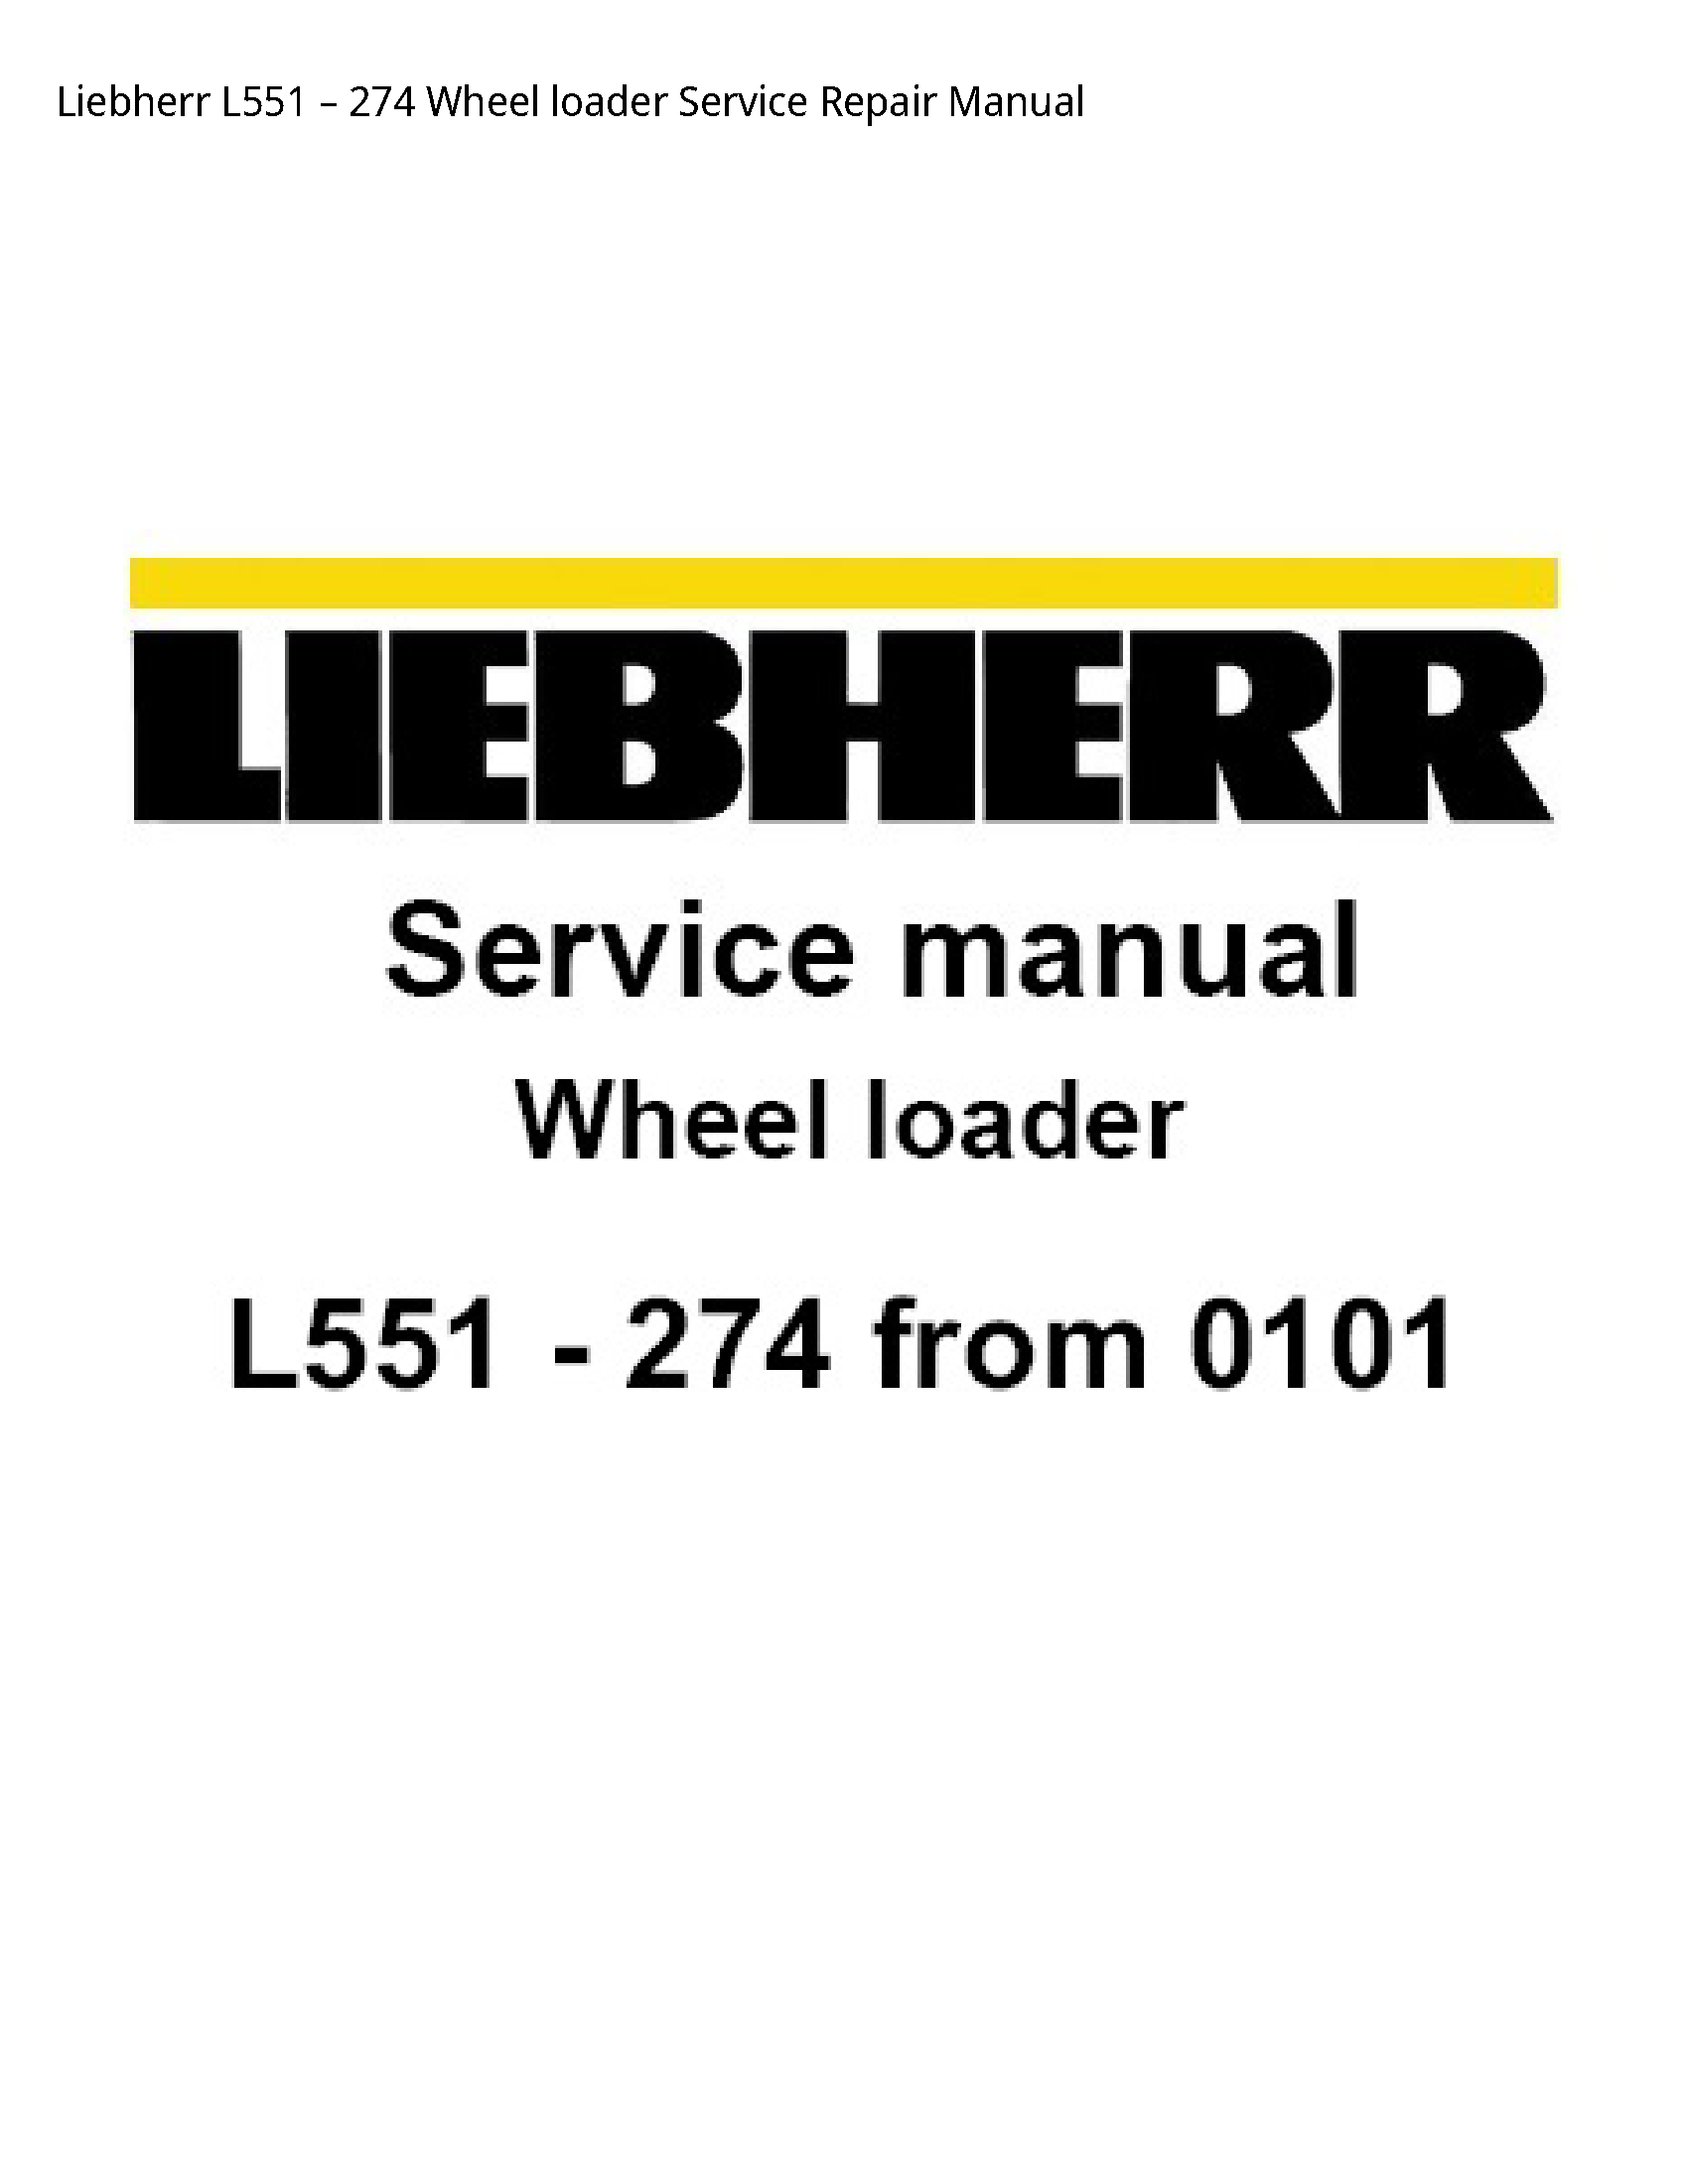 Liebherr L551 Wheel loader manual